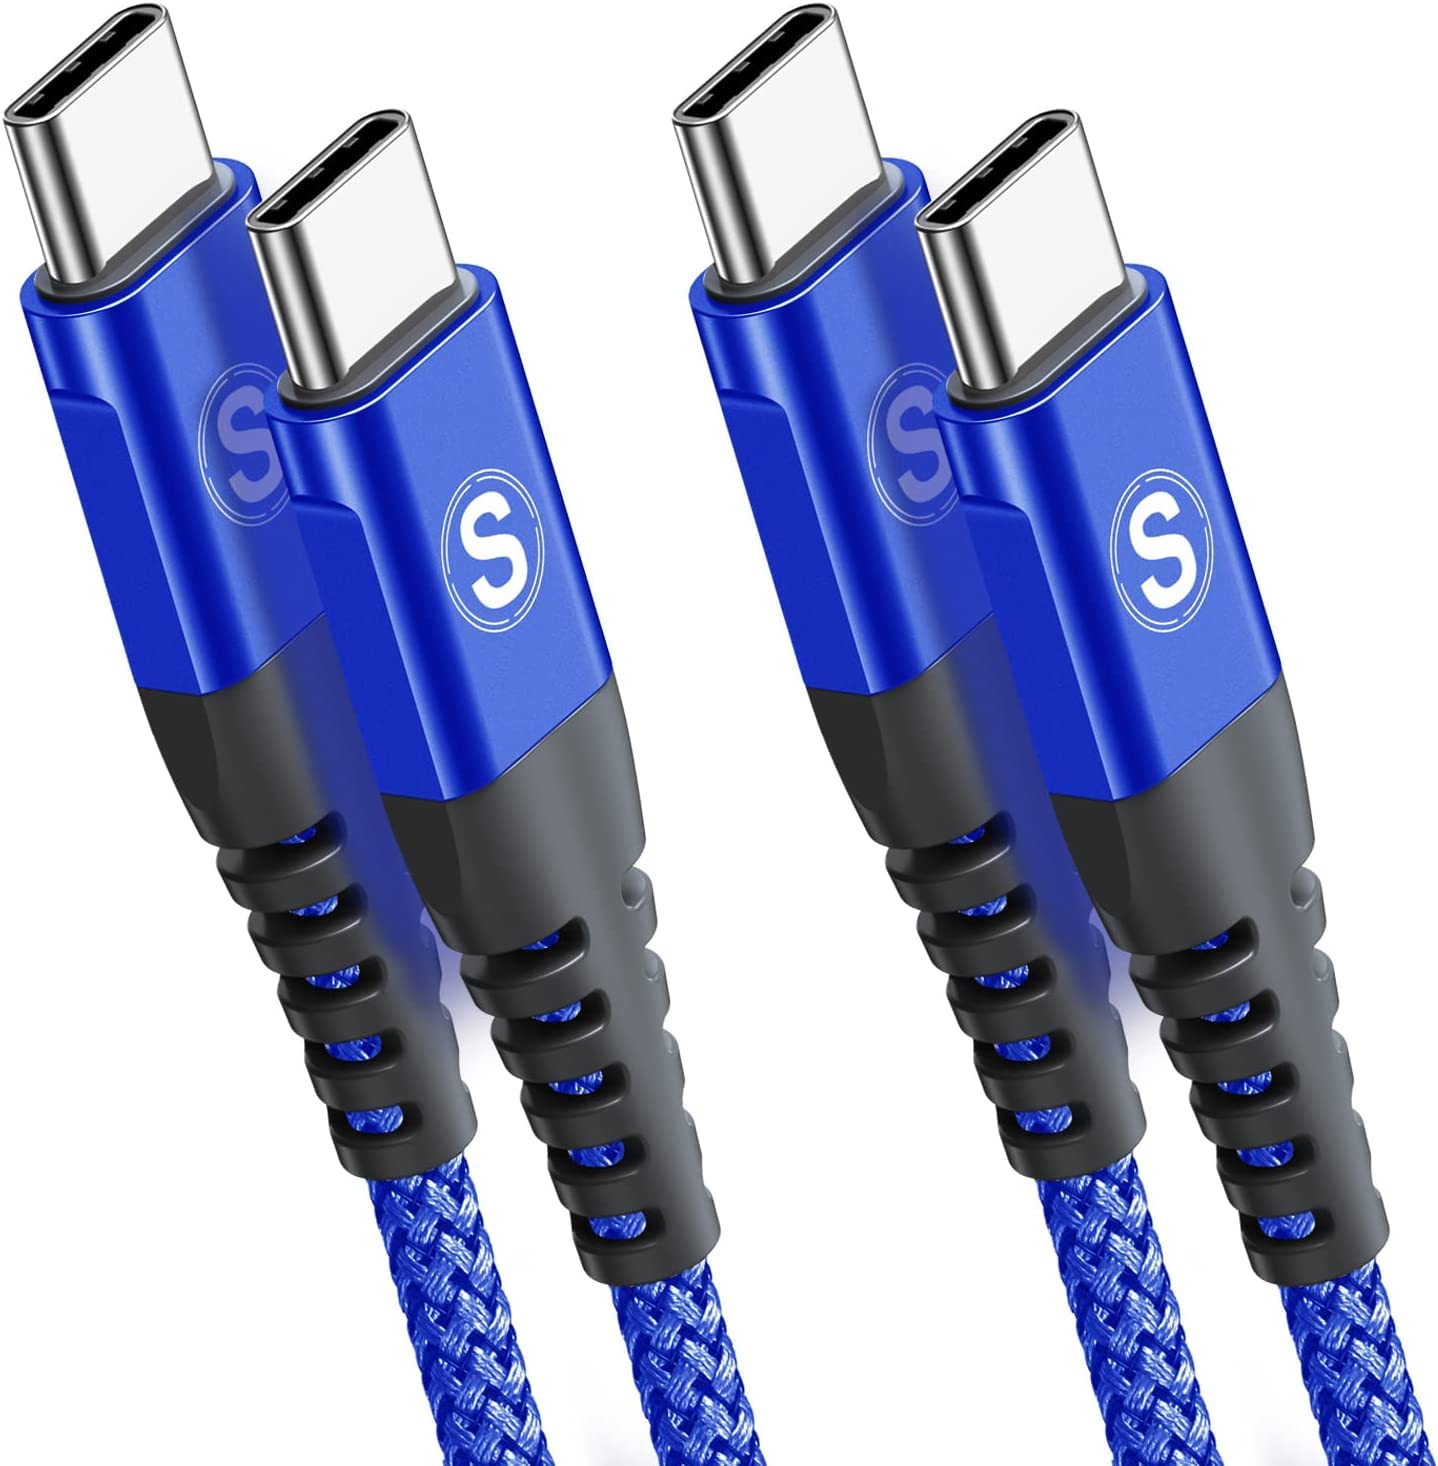 USB Type C to Type C ケーブル1M/2本セットSweguard USBC ケーブル PD対応 60W急速充電ケーブル 三重編組ナイロン MacBook、iPad Pro/Air、Galaxy 、Sony Xperia XZ、OnePlus、Google Pixel、Samsung Galaxy S21/S20/S10、HuaweiなどUSB-C機種対応(青い)